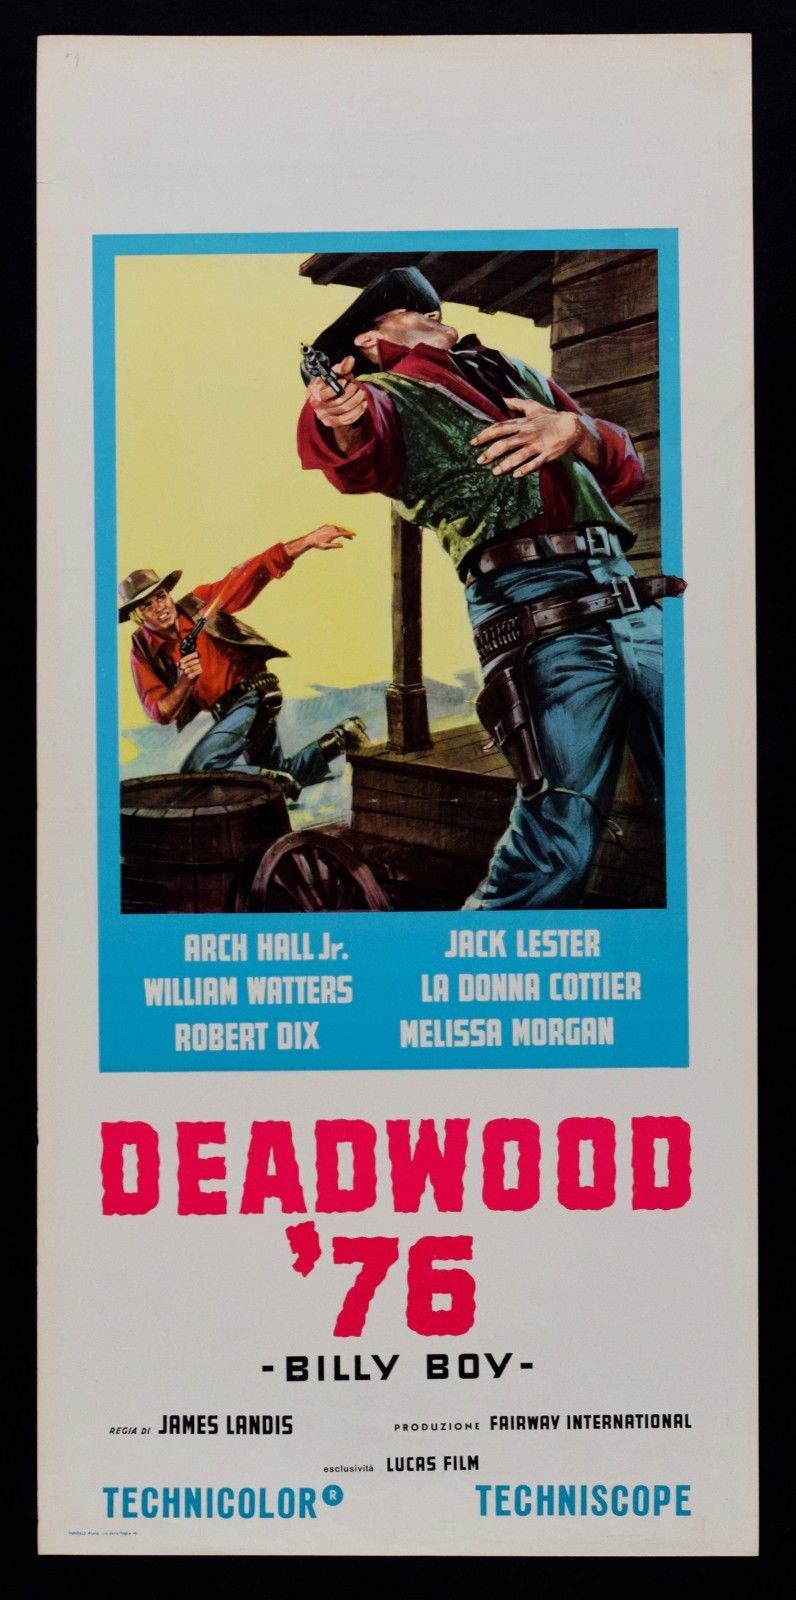 Deadwood '76 (1965) Screenshot 4 